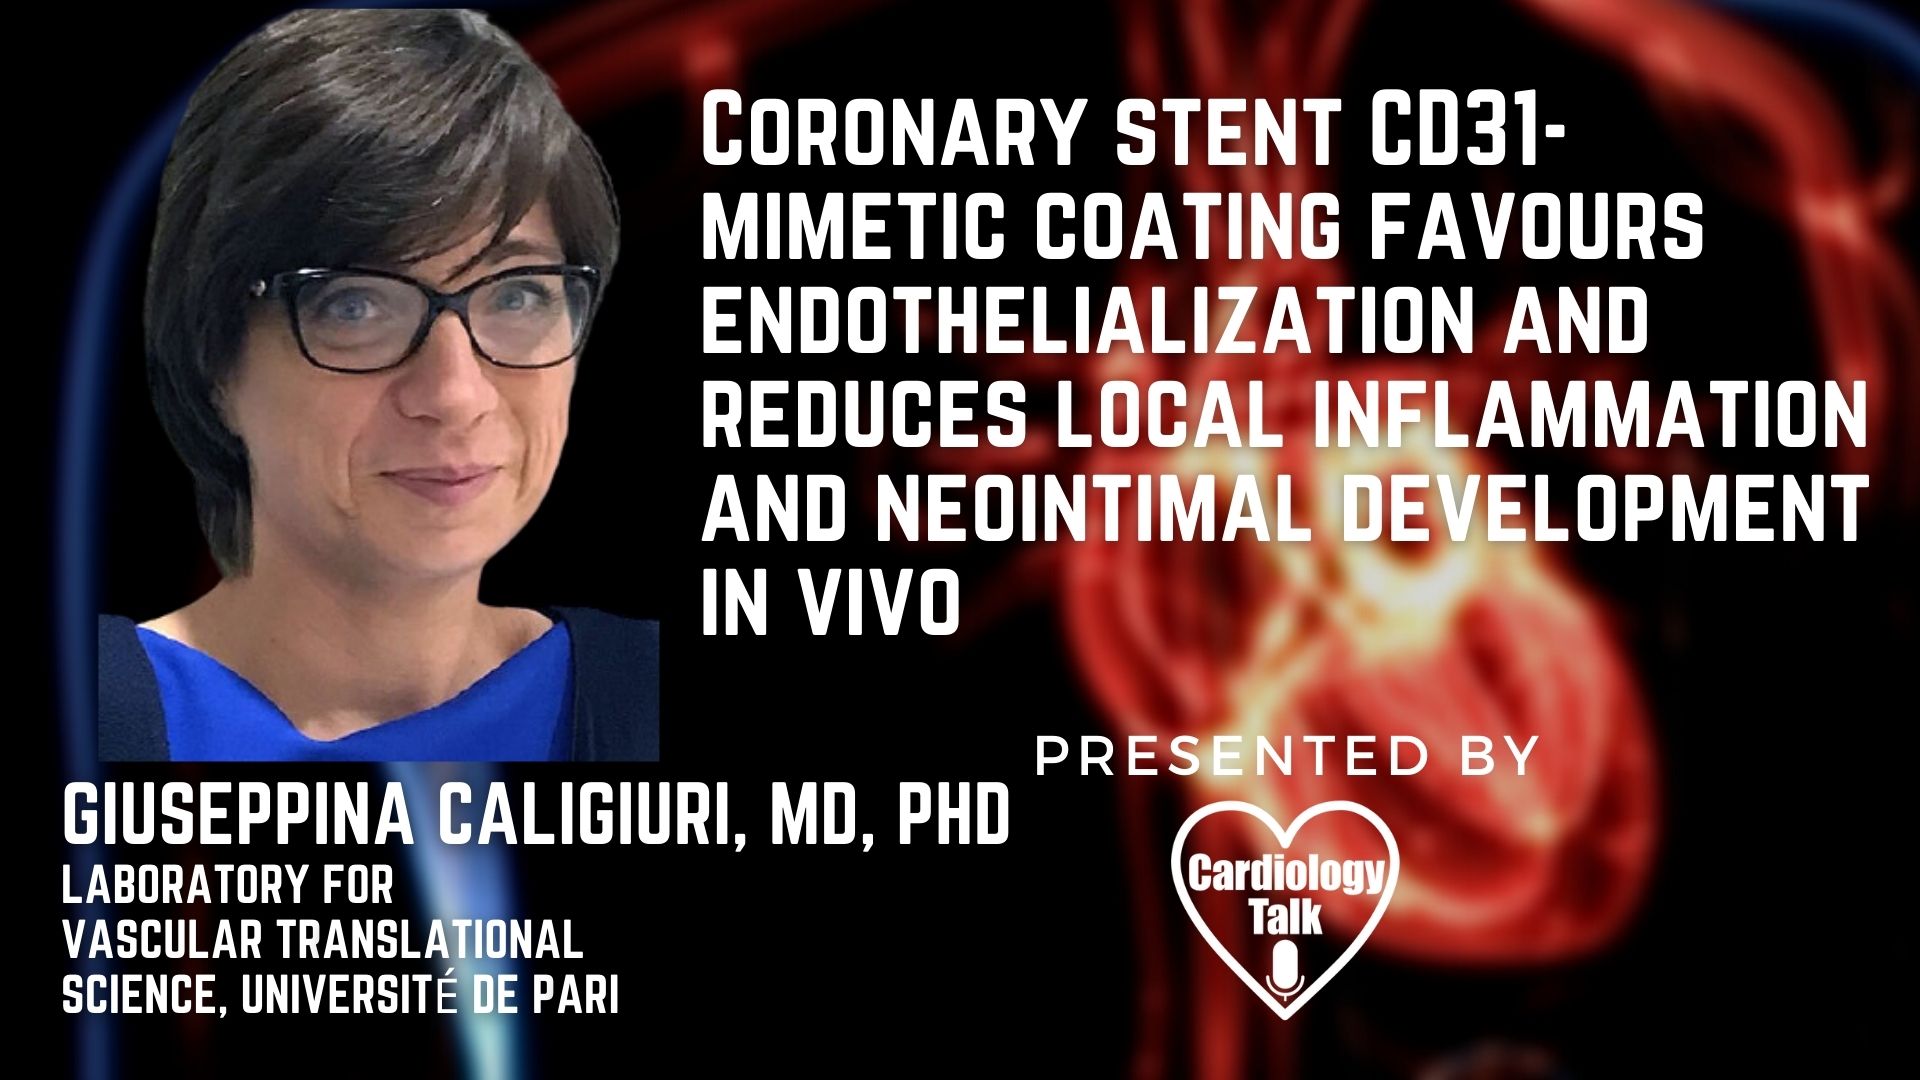 Giuseppina Caligiuri, MD @pinacaligiuri @Inserm @Univ_Paris #CoronaryStint #Cardiology #Heart #Research Coronary Stent CD31-mimetic Coating Favours Endothelialization And Reduces Local In...